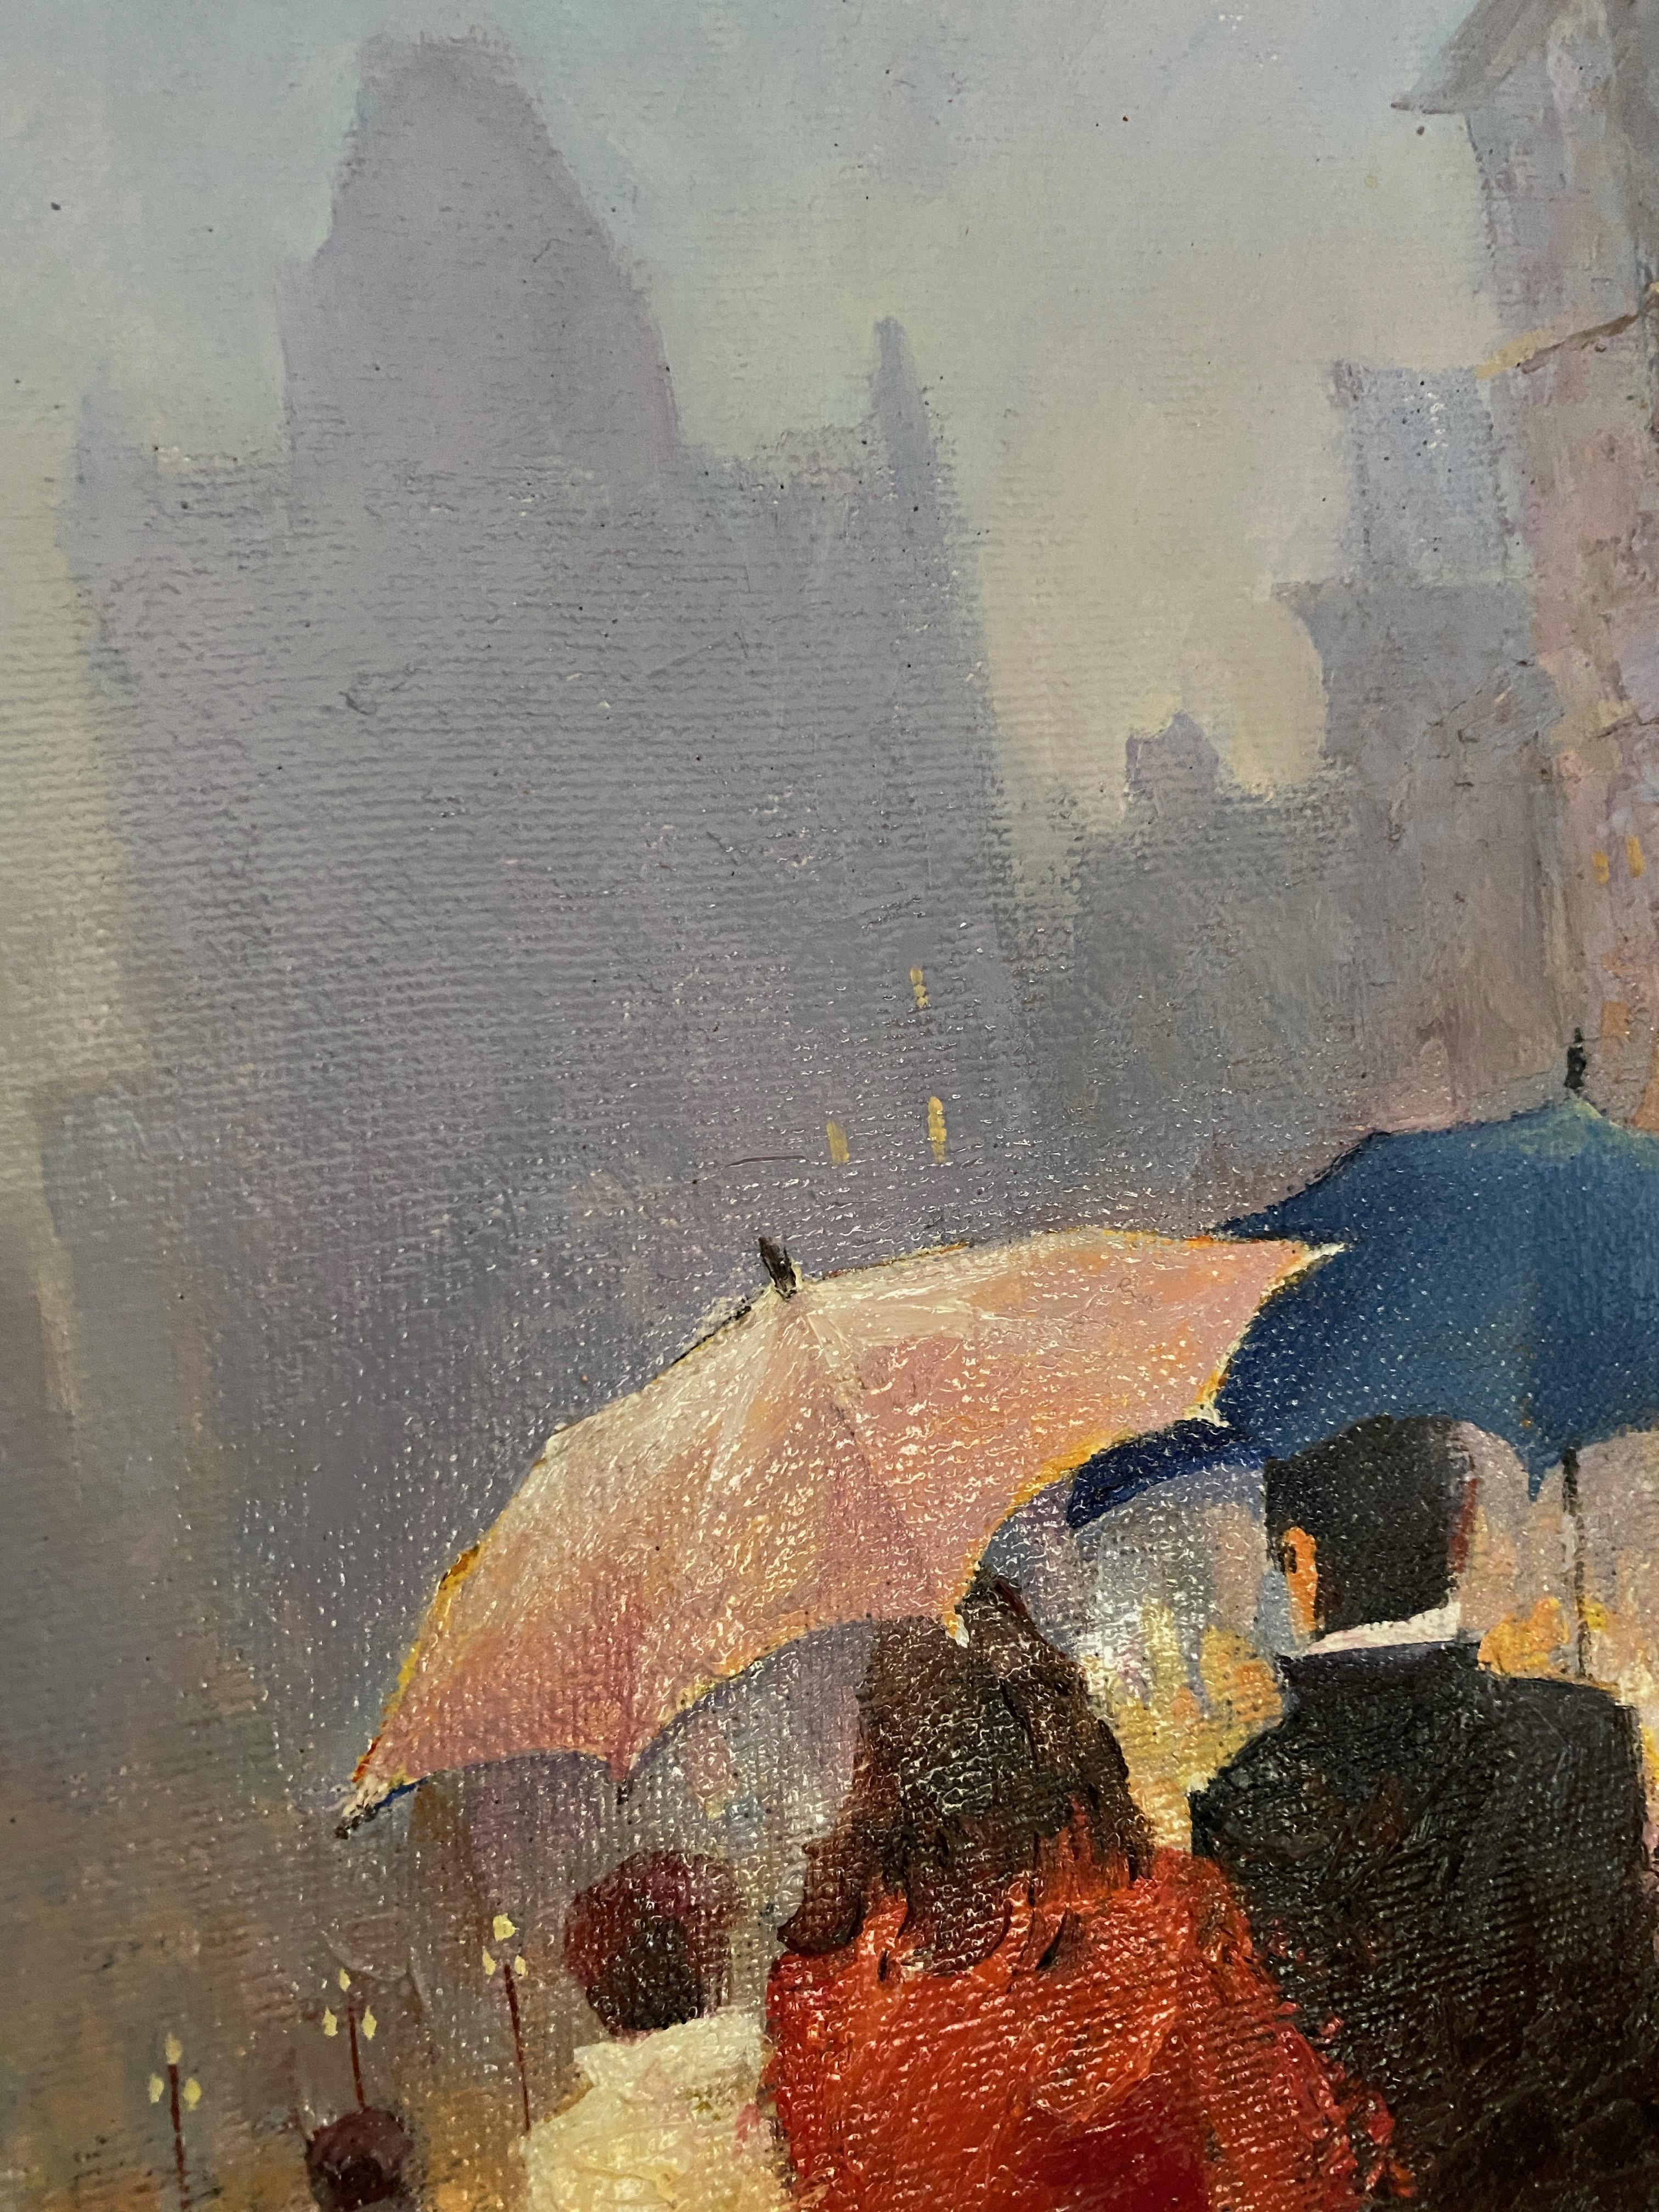 Rainy day. Oil on canvas. Impressionistic colorful street scene. 2